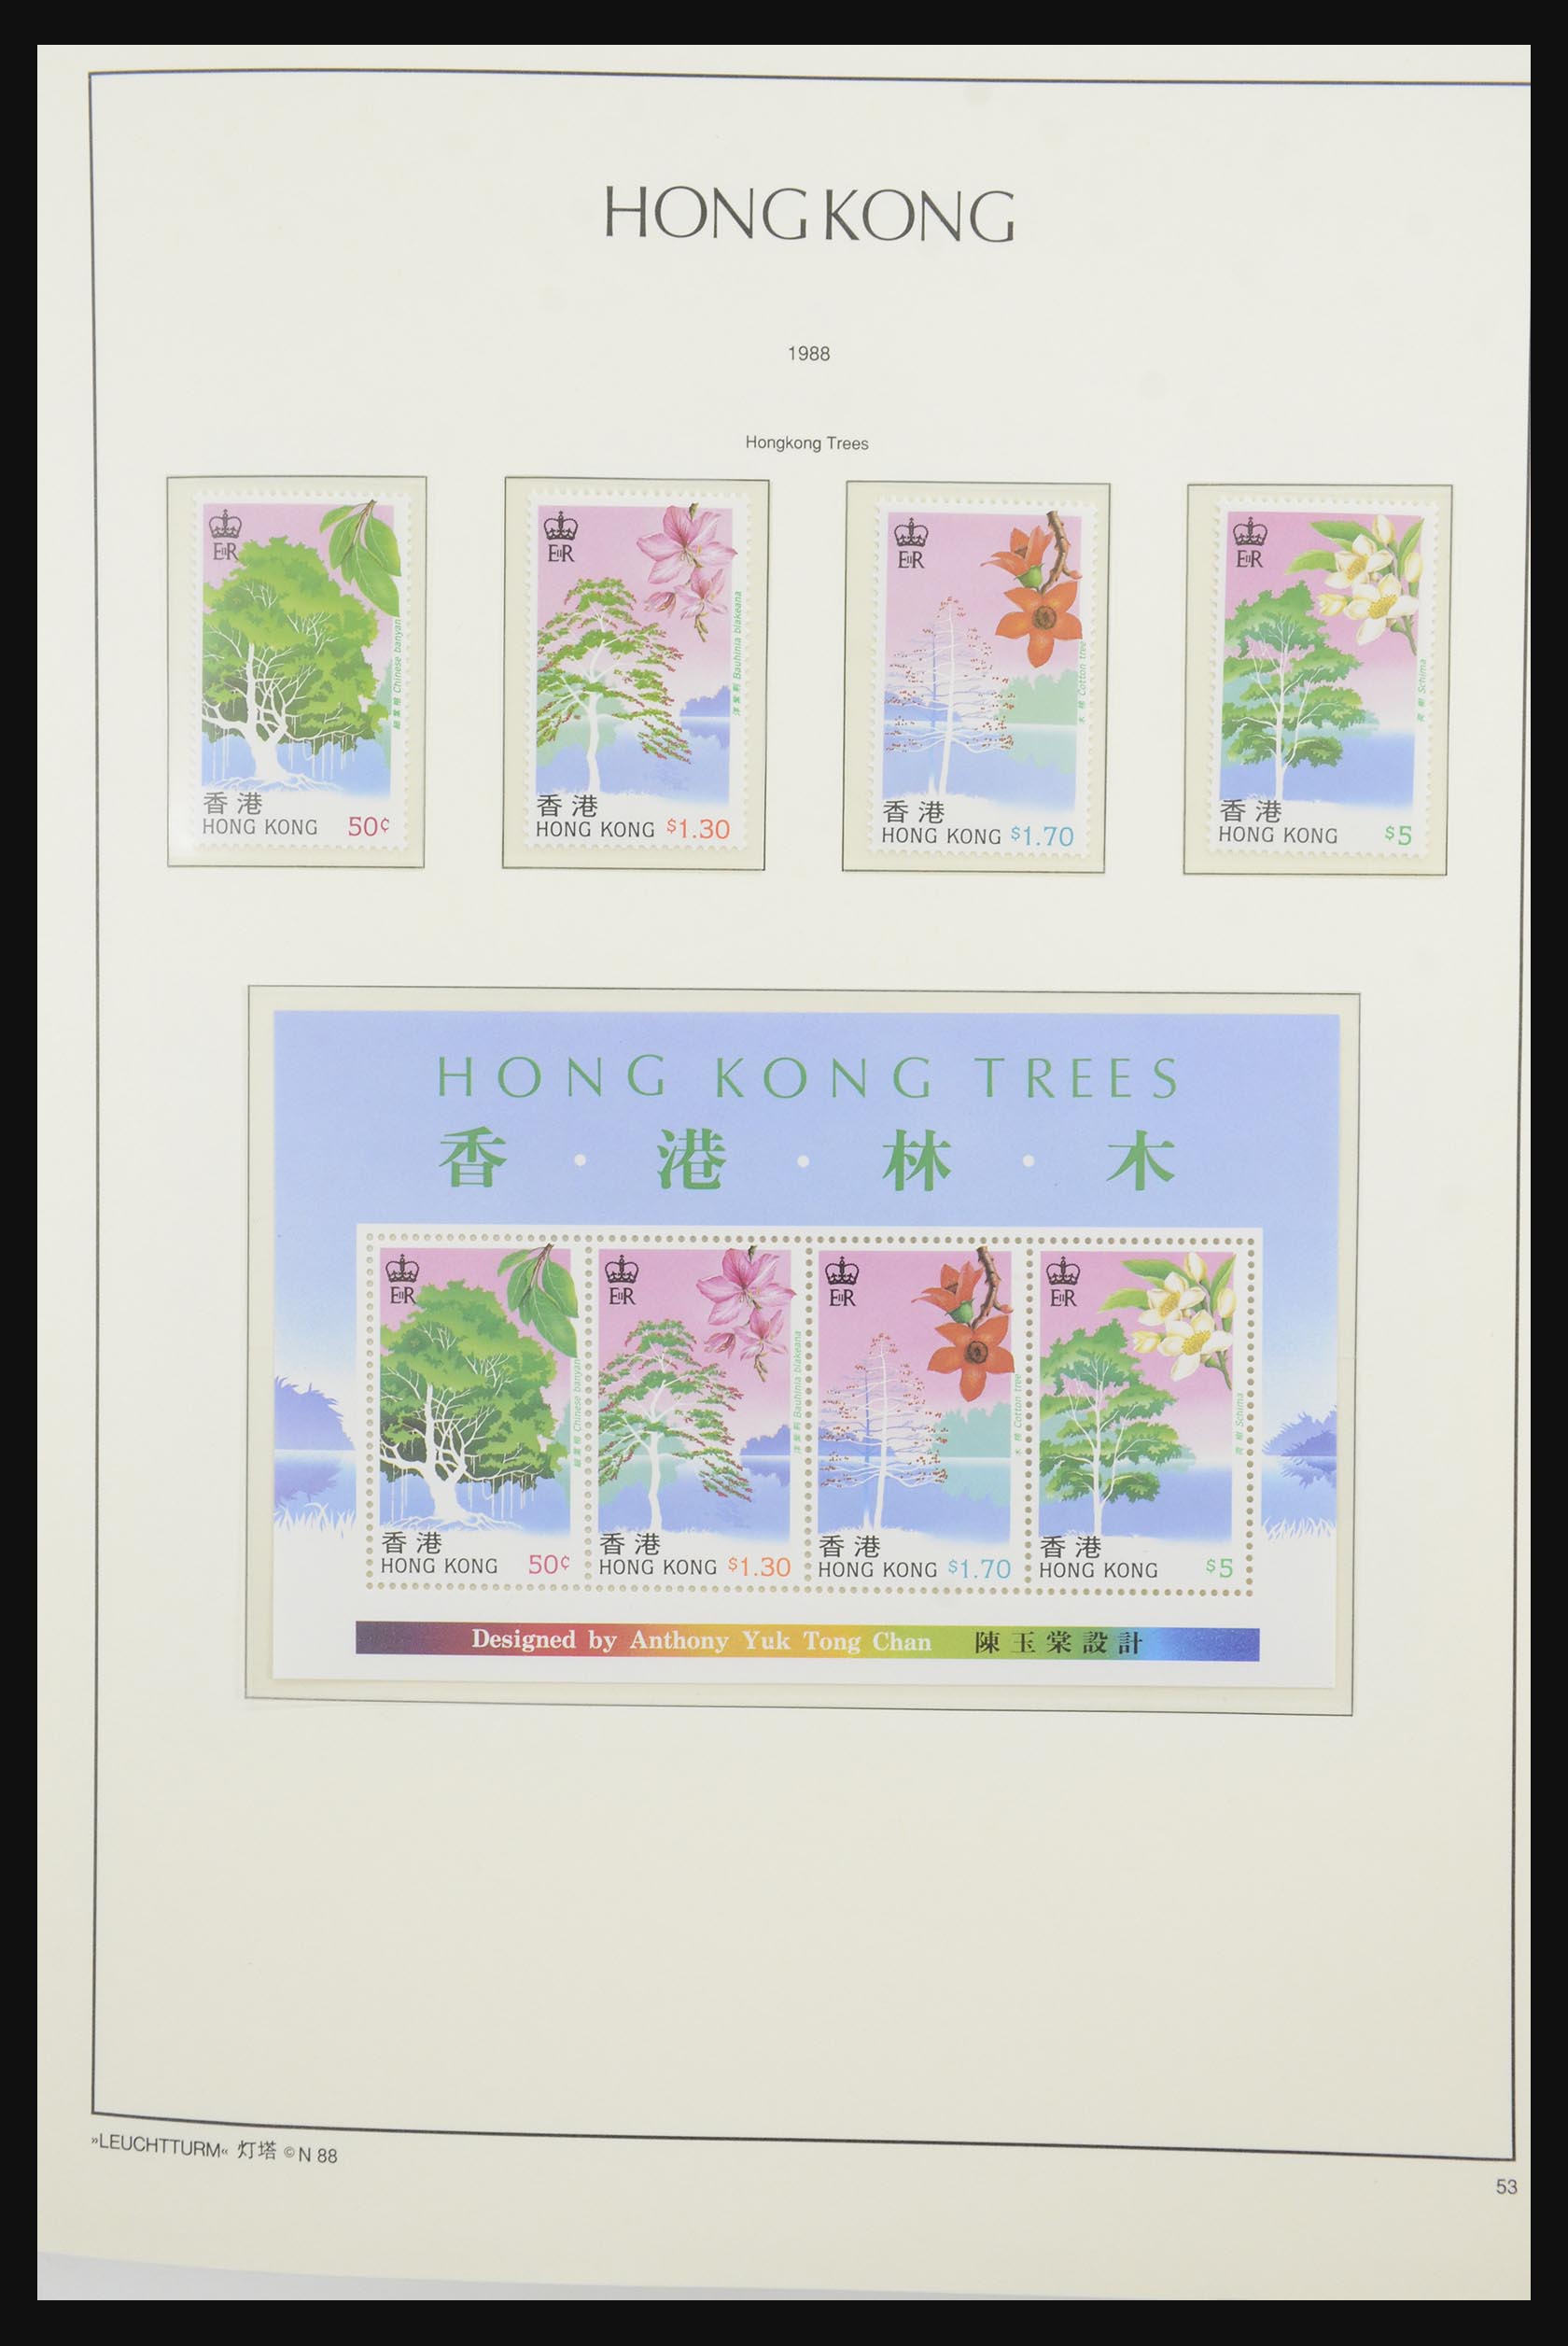 31994 029 - 31994 Hong Kong 1974-2003.